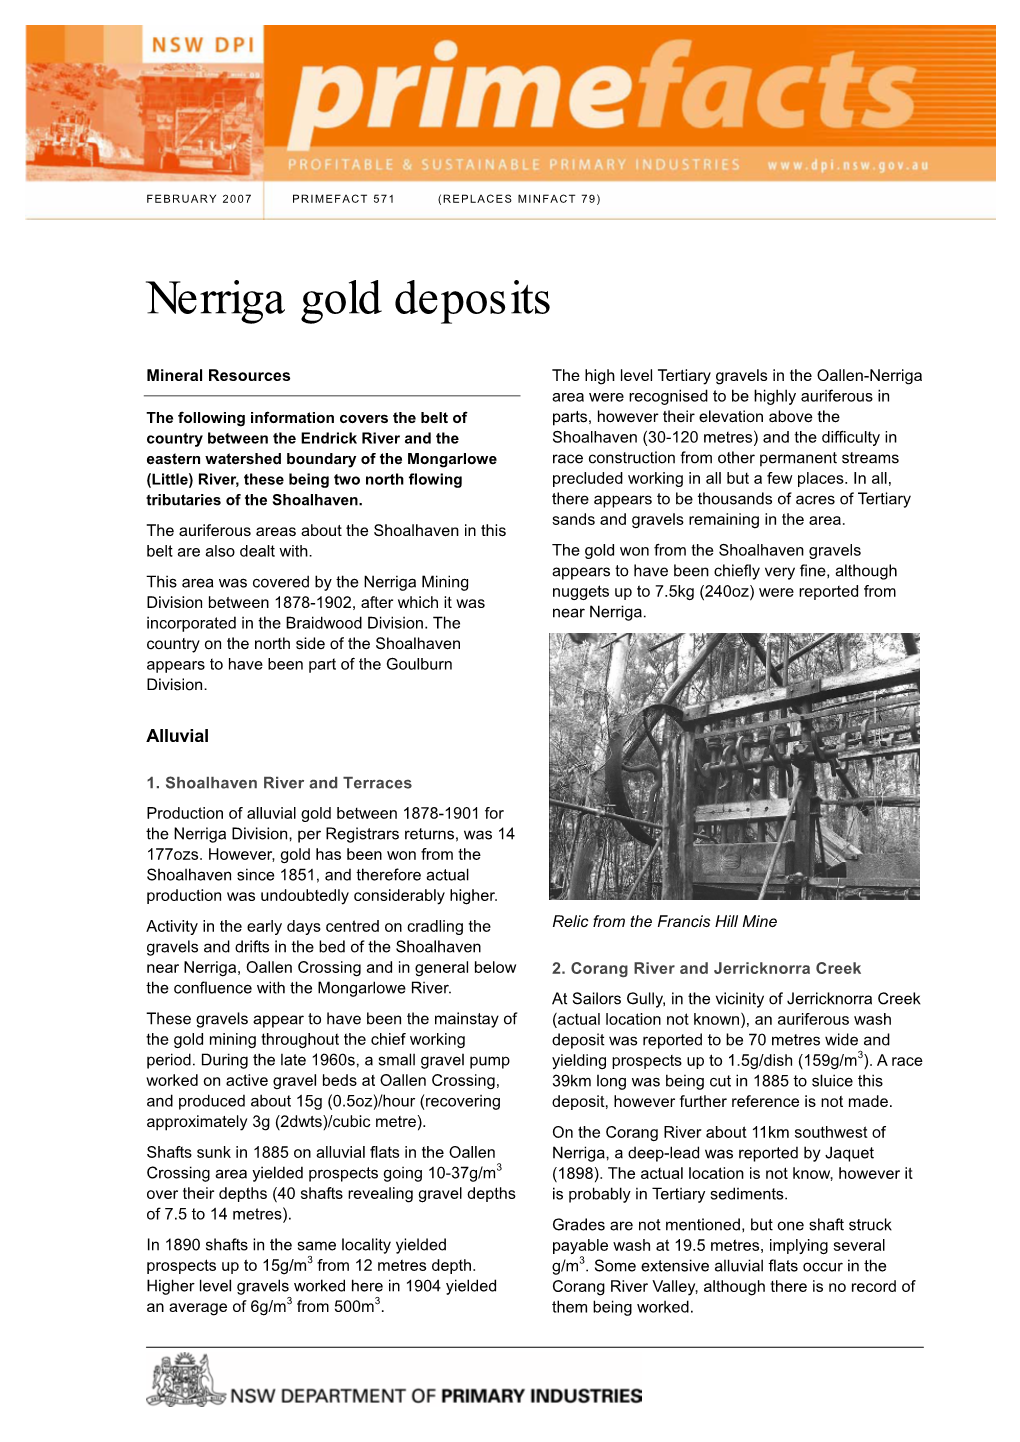 Nerriga Gold Deposits